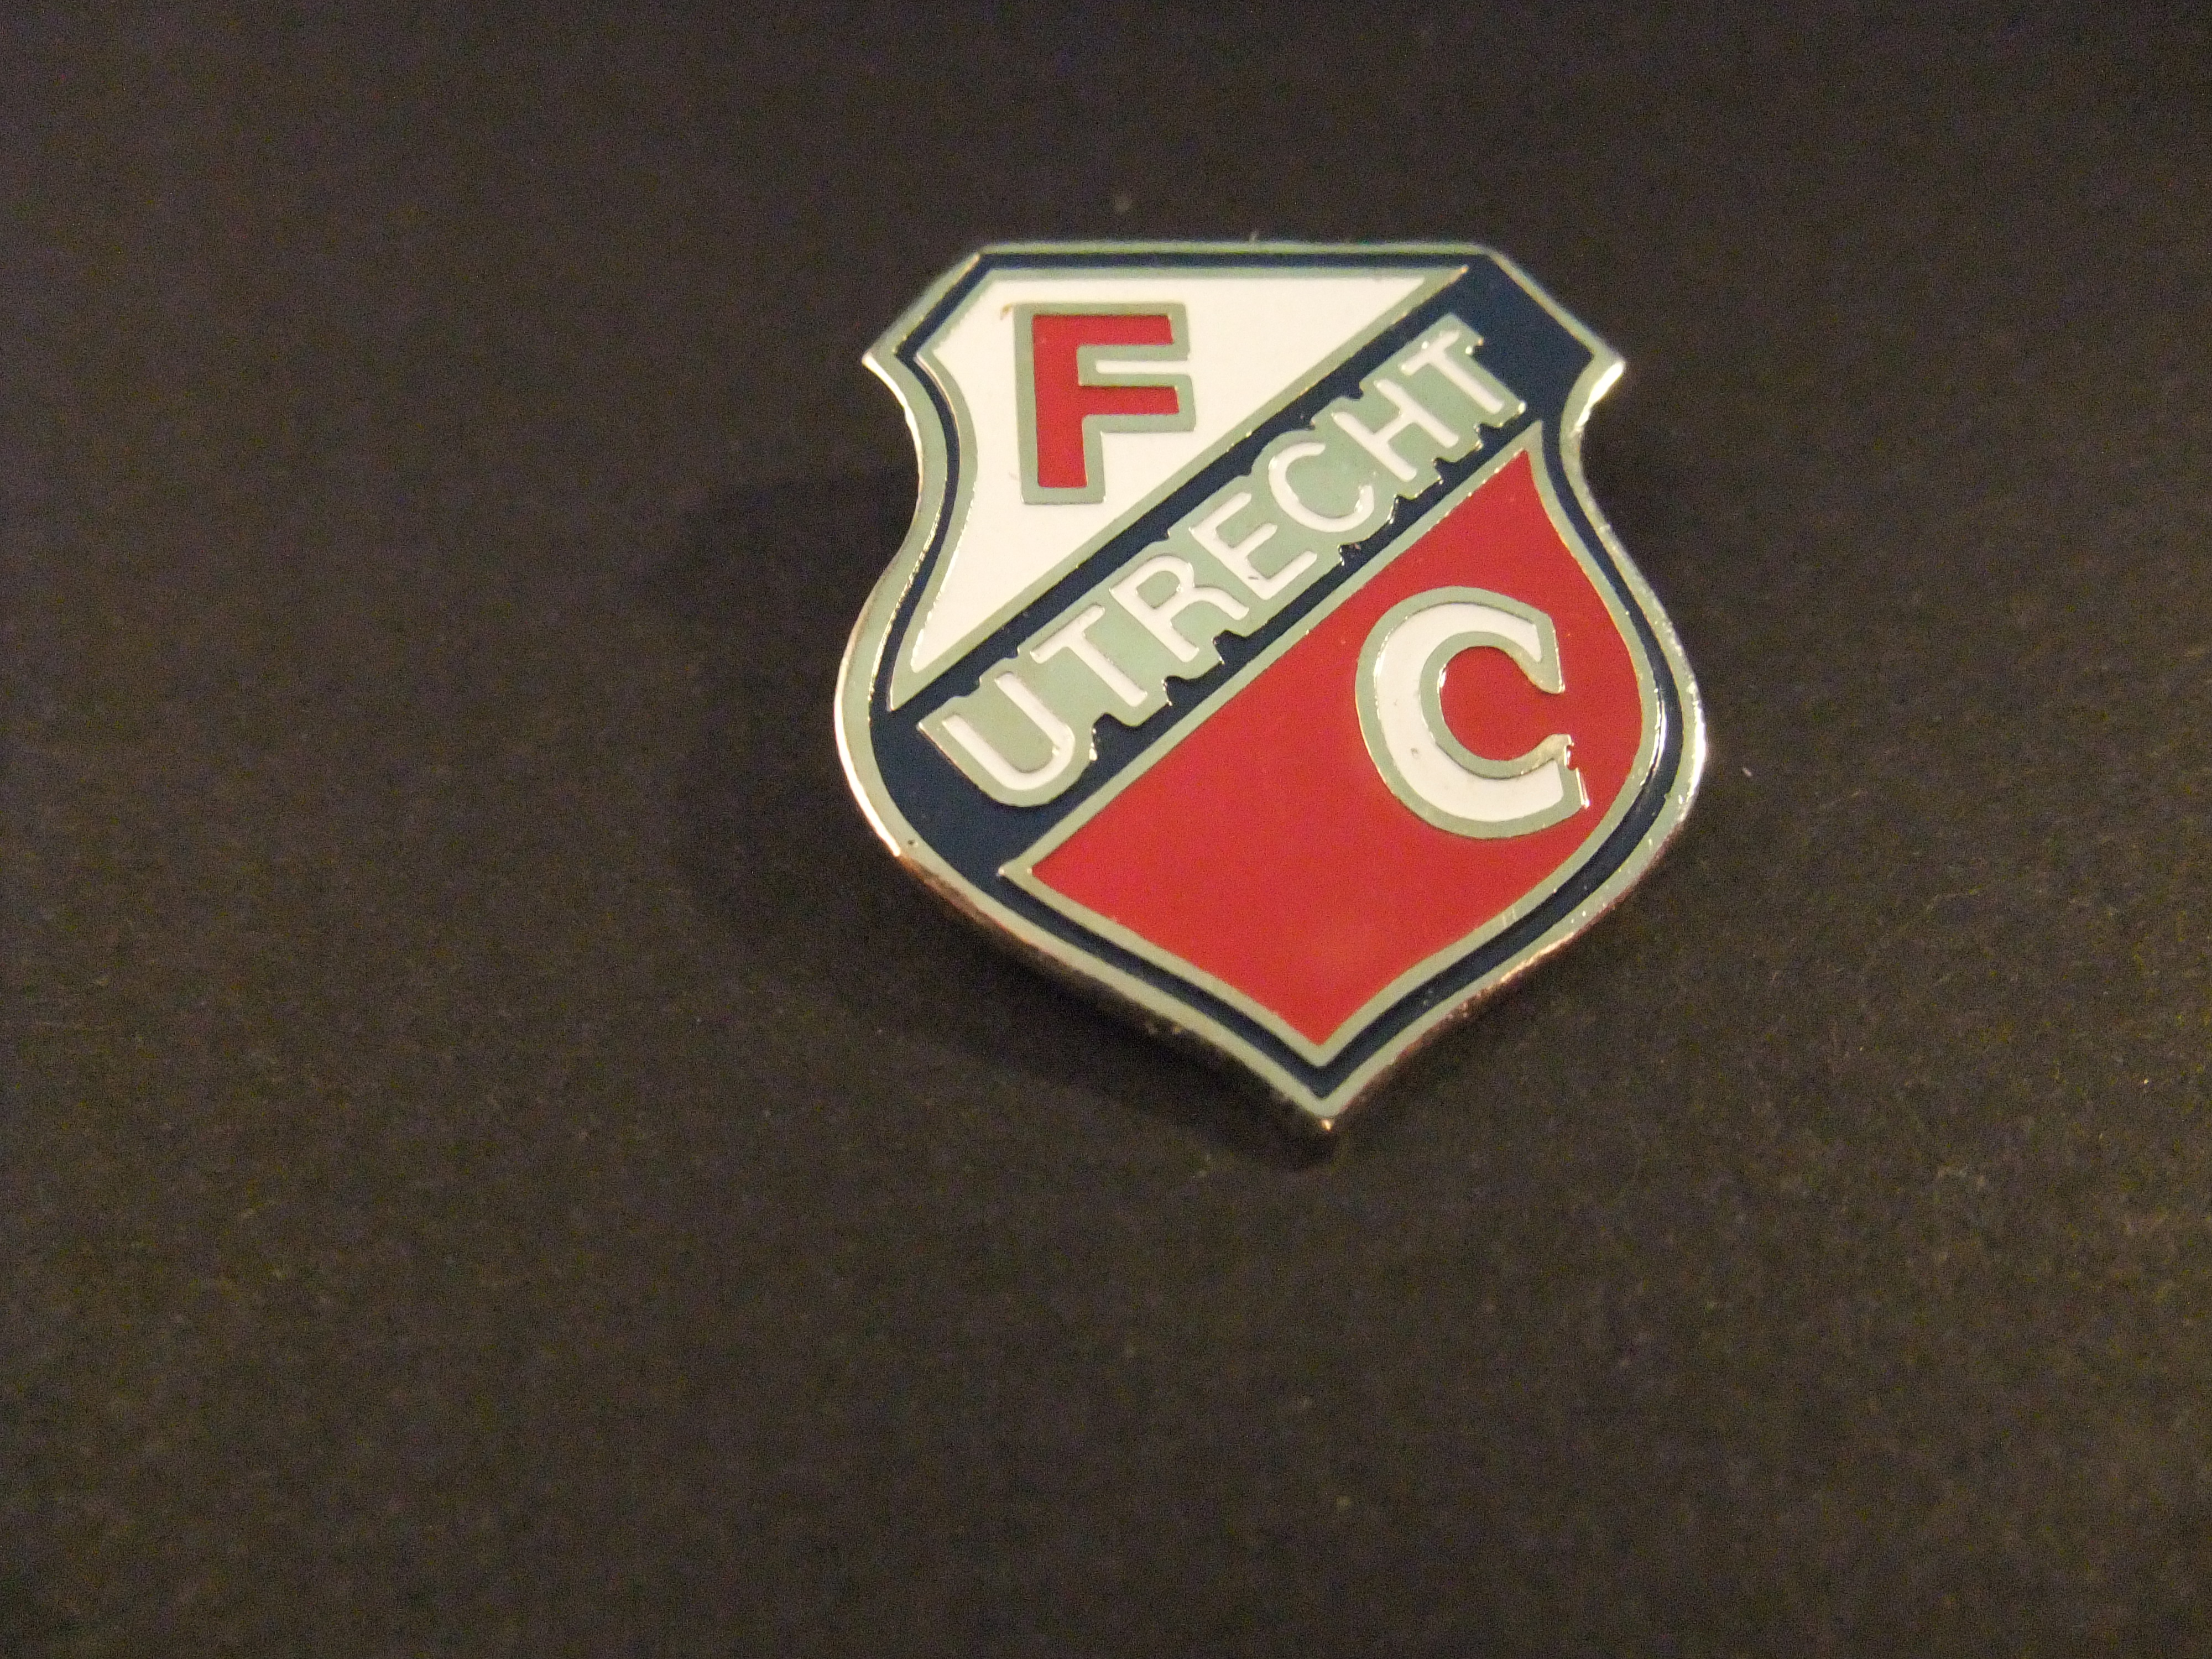 FC Utrecht voetbalclub logo